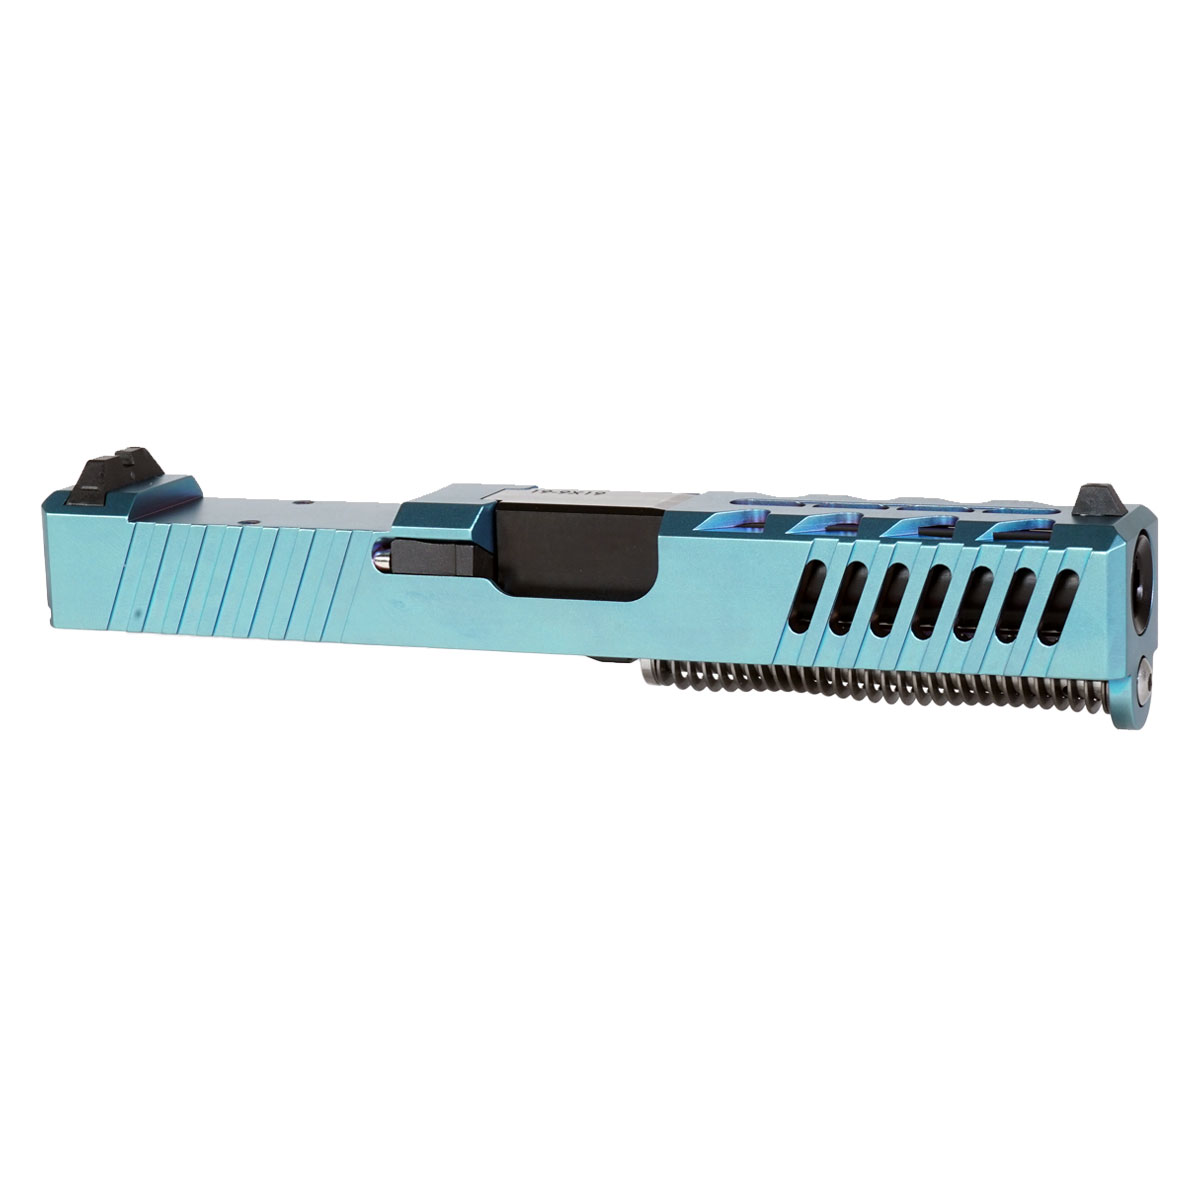 DTT 'Ripplemaker' 9mm Complete Slide Kit - Glock 19 Gen 1-3 Compatible